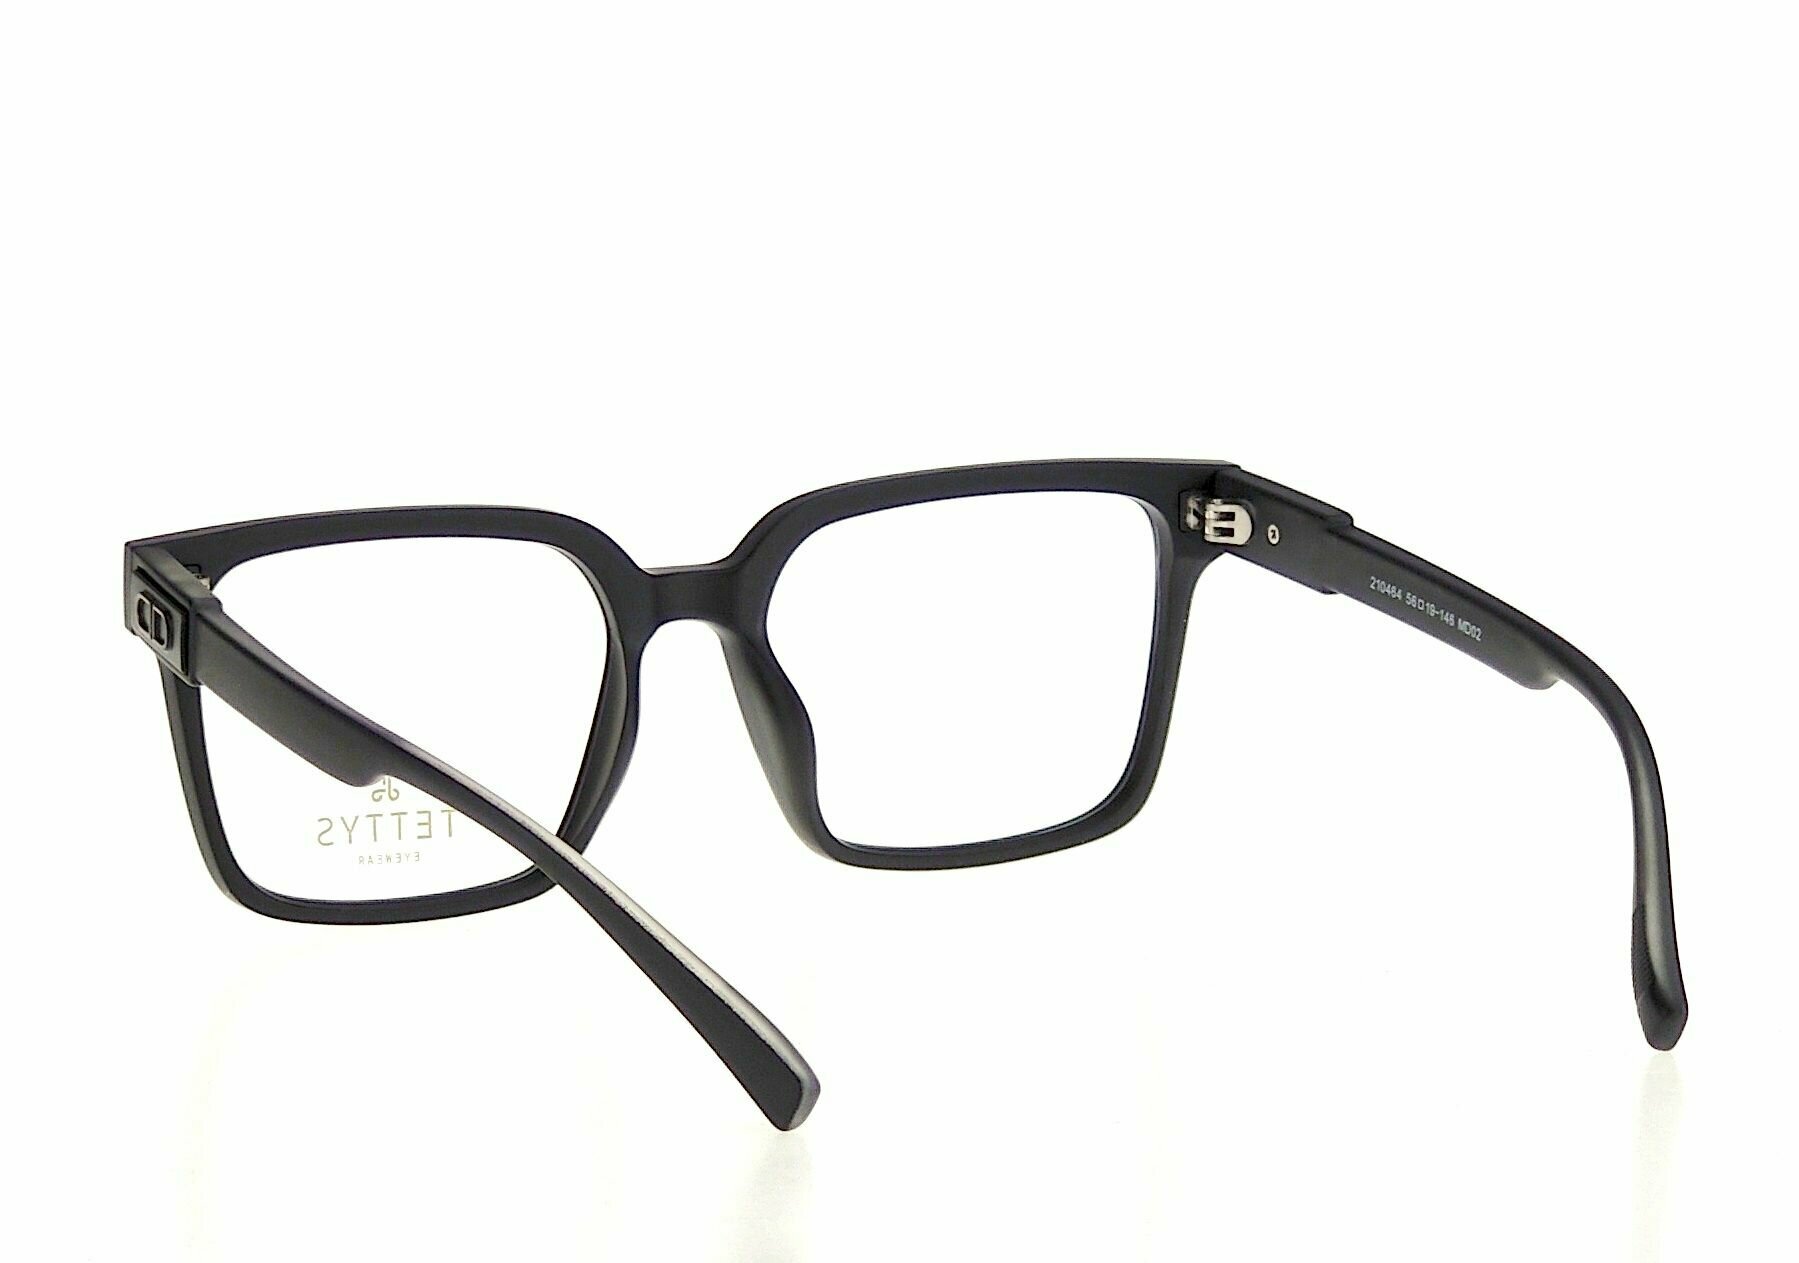 Фотохромные очки с футляром на магните TETTYS EYEWEAR мод. 210464 Цвет 2 с линзами NIKITA 1.56 Colophony GRAY, HMC+ -4.00 РЦ 70-72